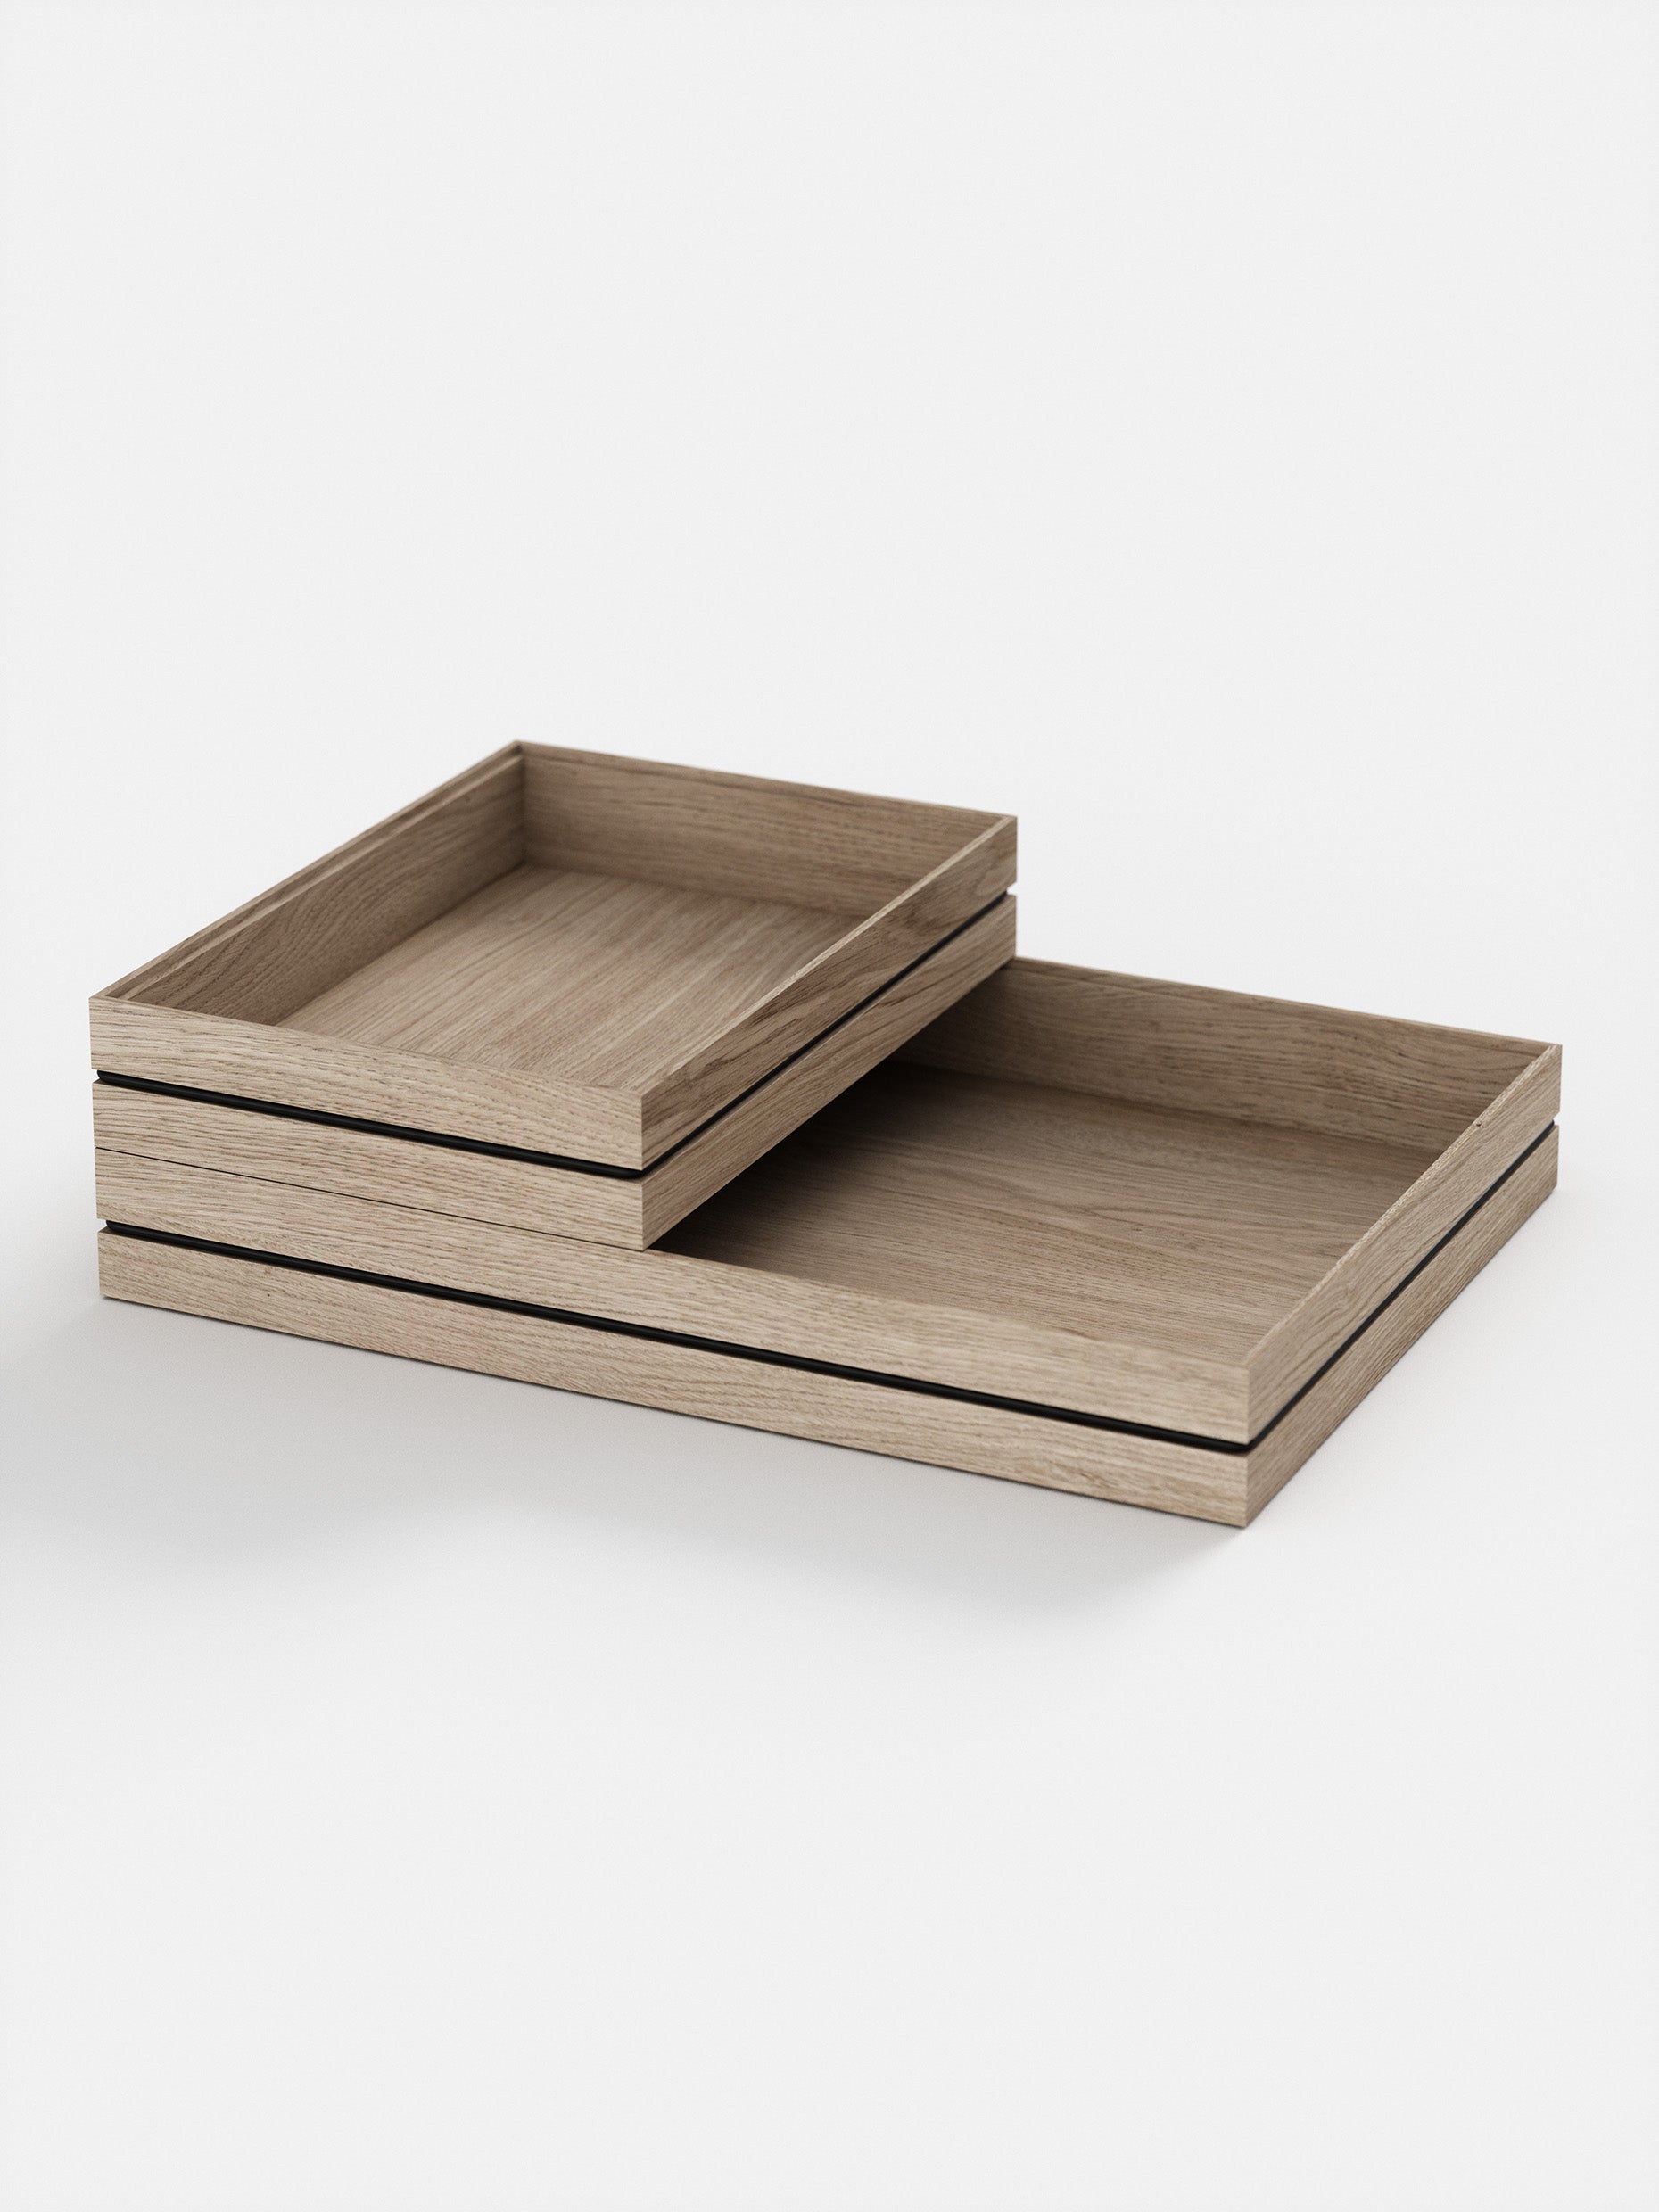 Functional and Sleek Wooden Tray | Organise | Small | by Moebe - Lifestory - Moebe